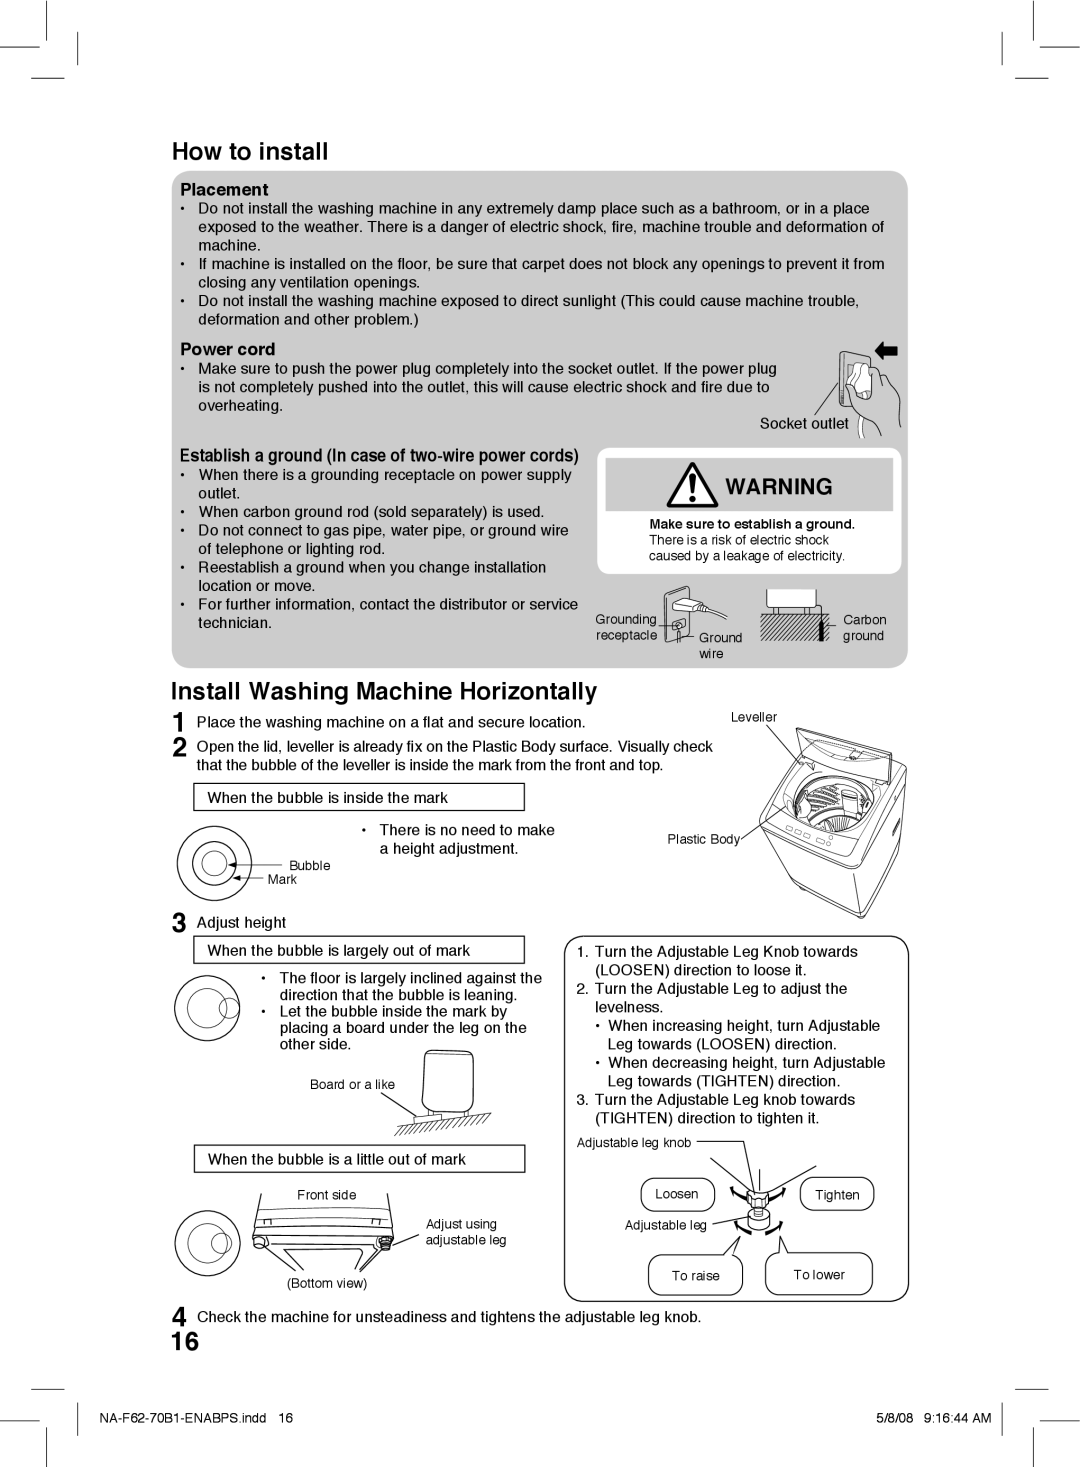 Panasonic NA-F70B1, NA-F62B1 How to install, Install Washing Machine Horizontally, Placement, Power cord 